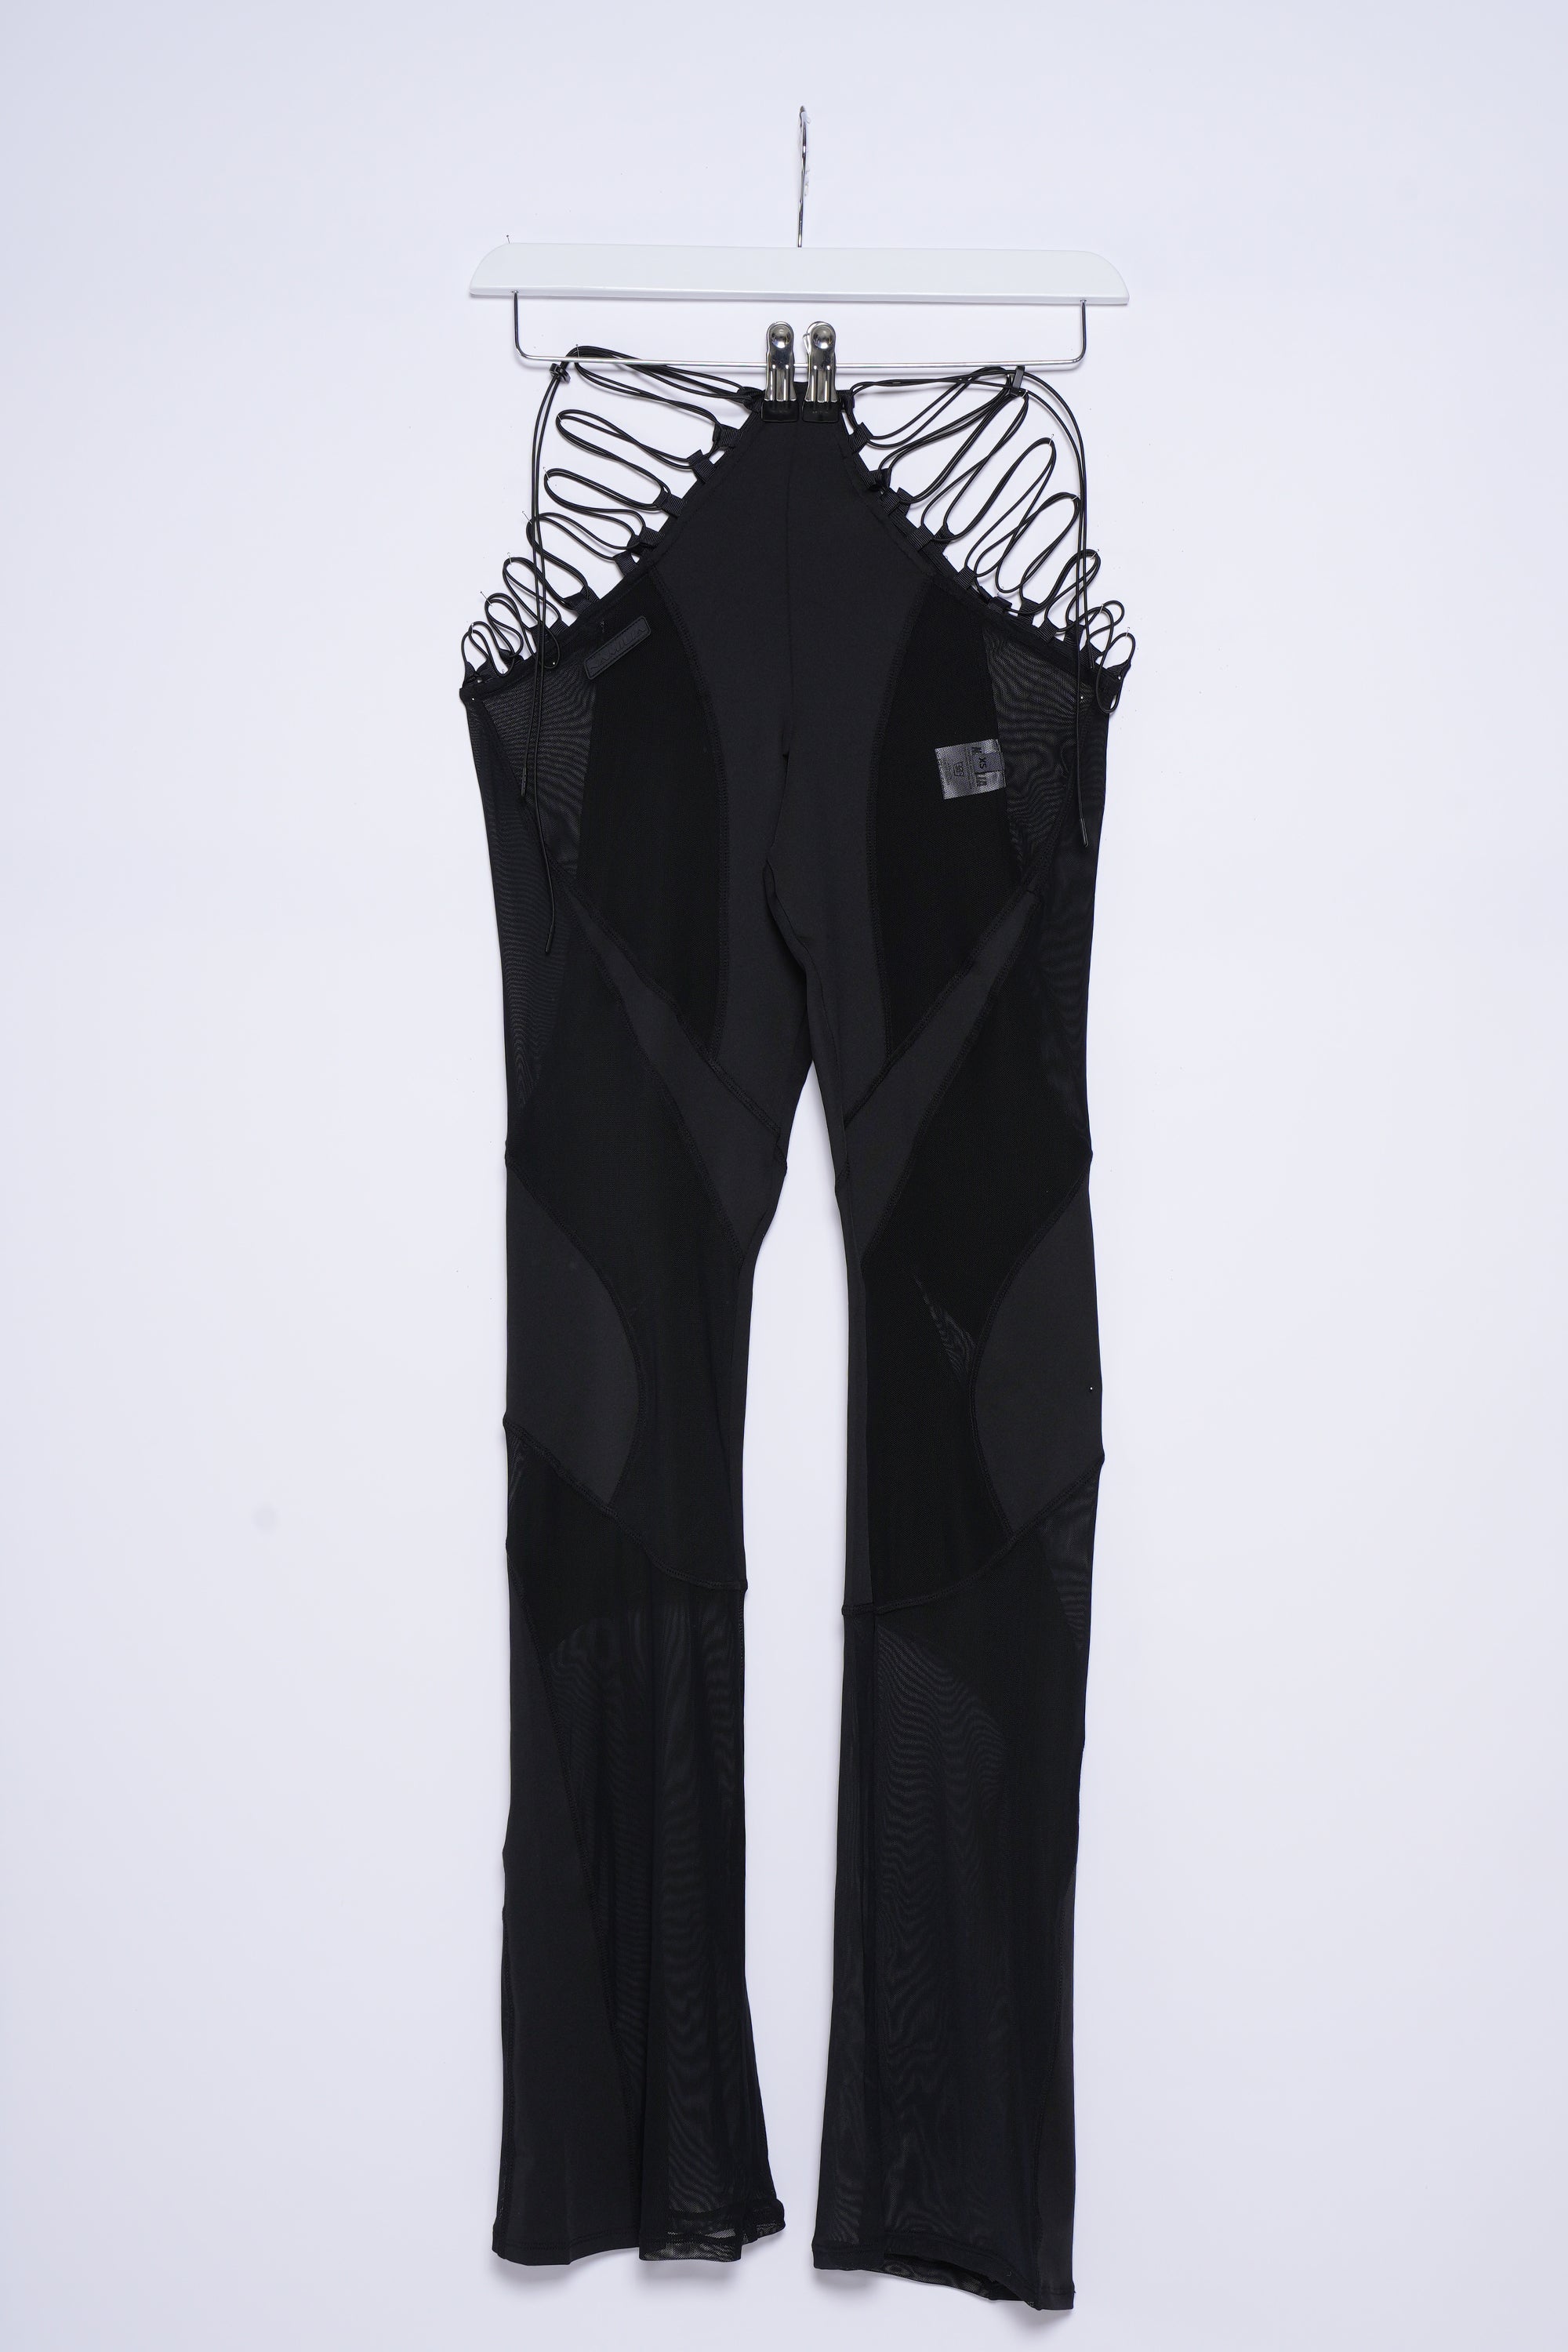 black lacing mesh pants